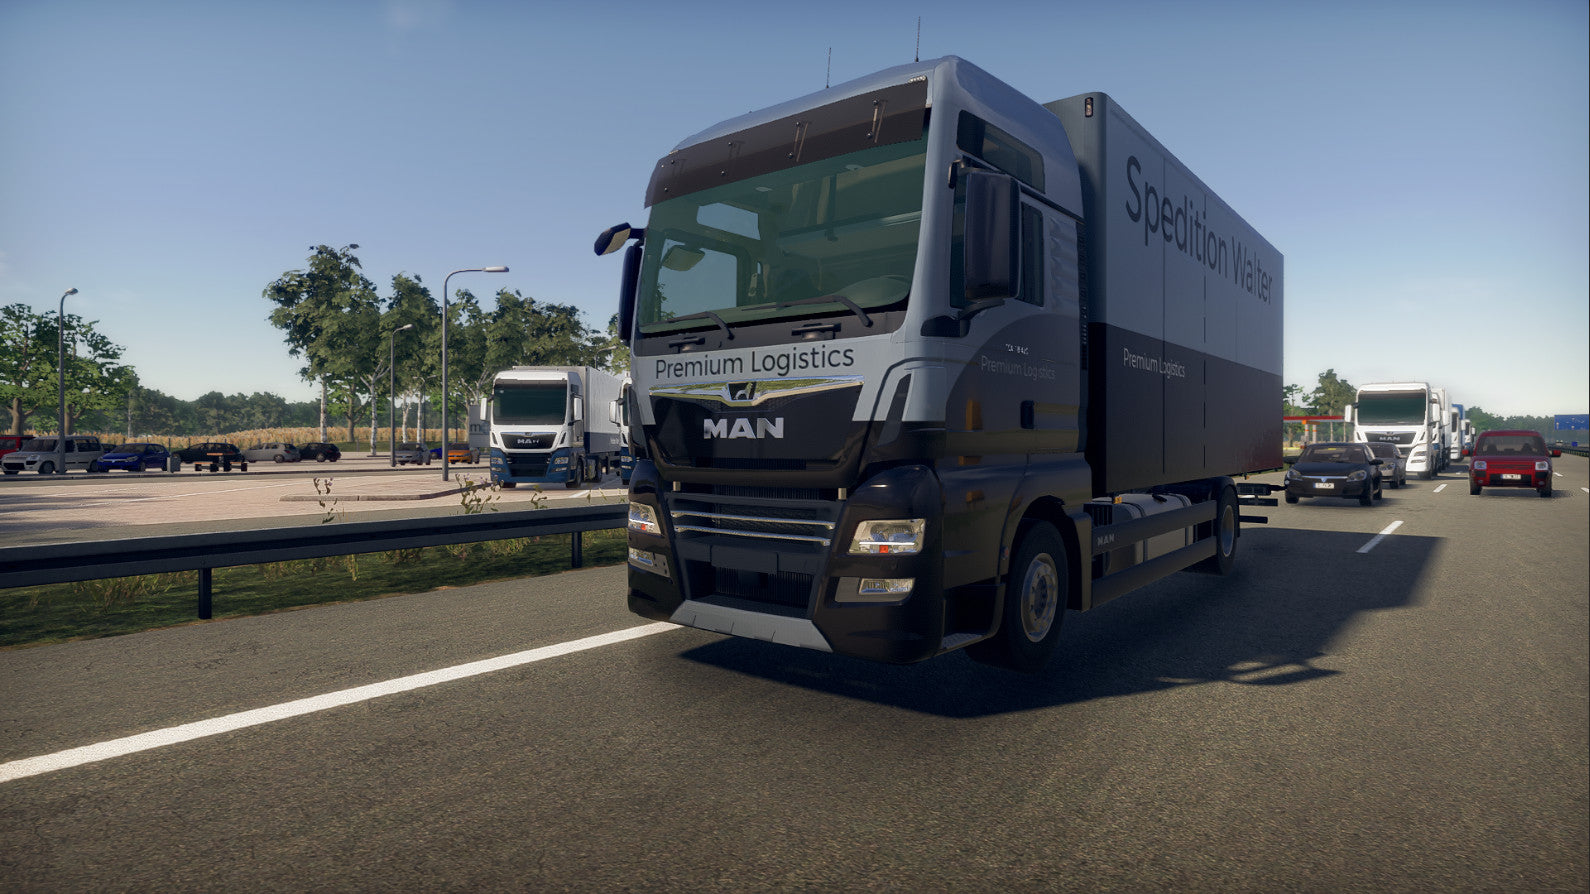 Truck & Logistics Simulator [PlayStation 5] • World of Games